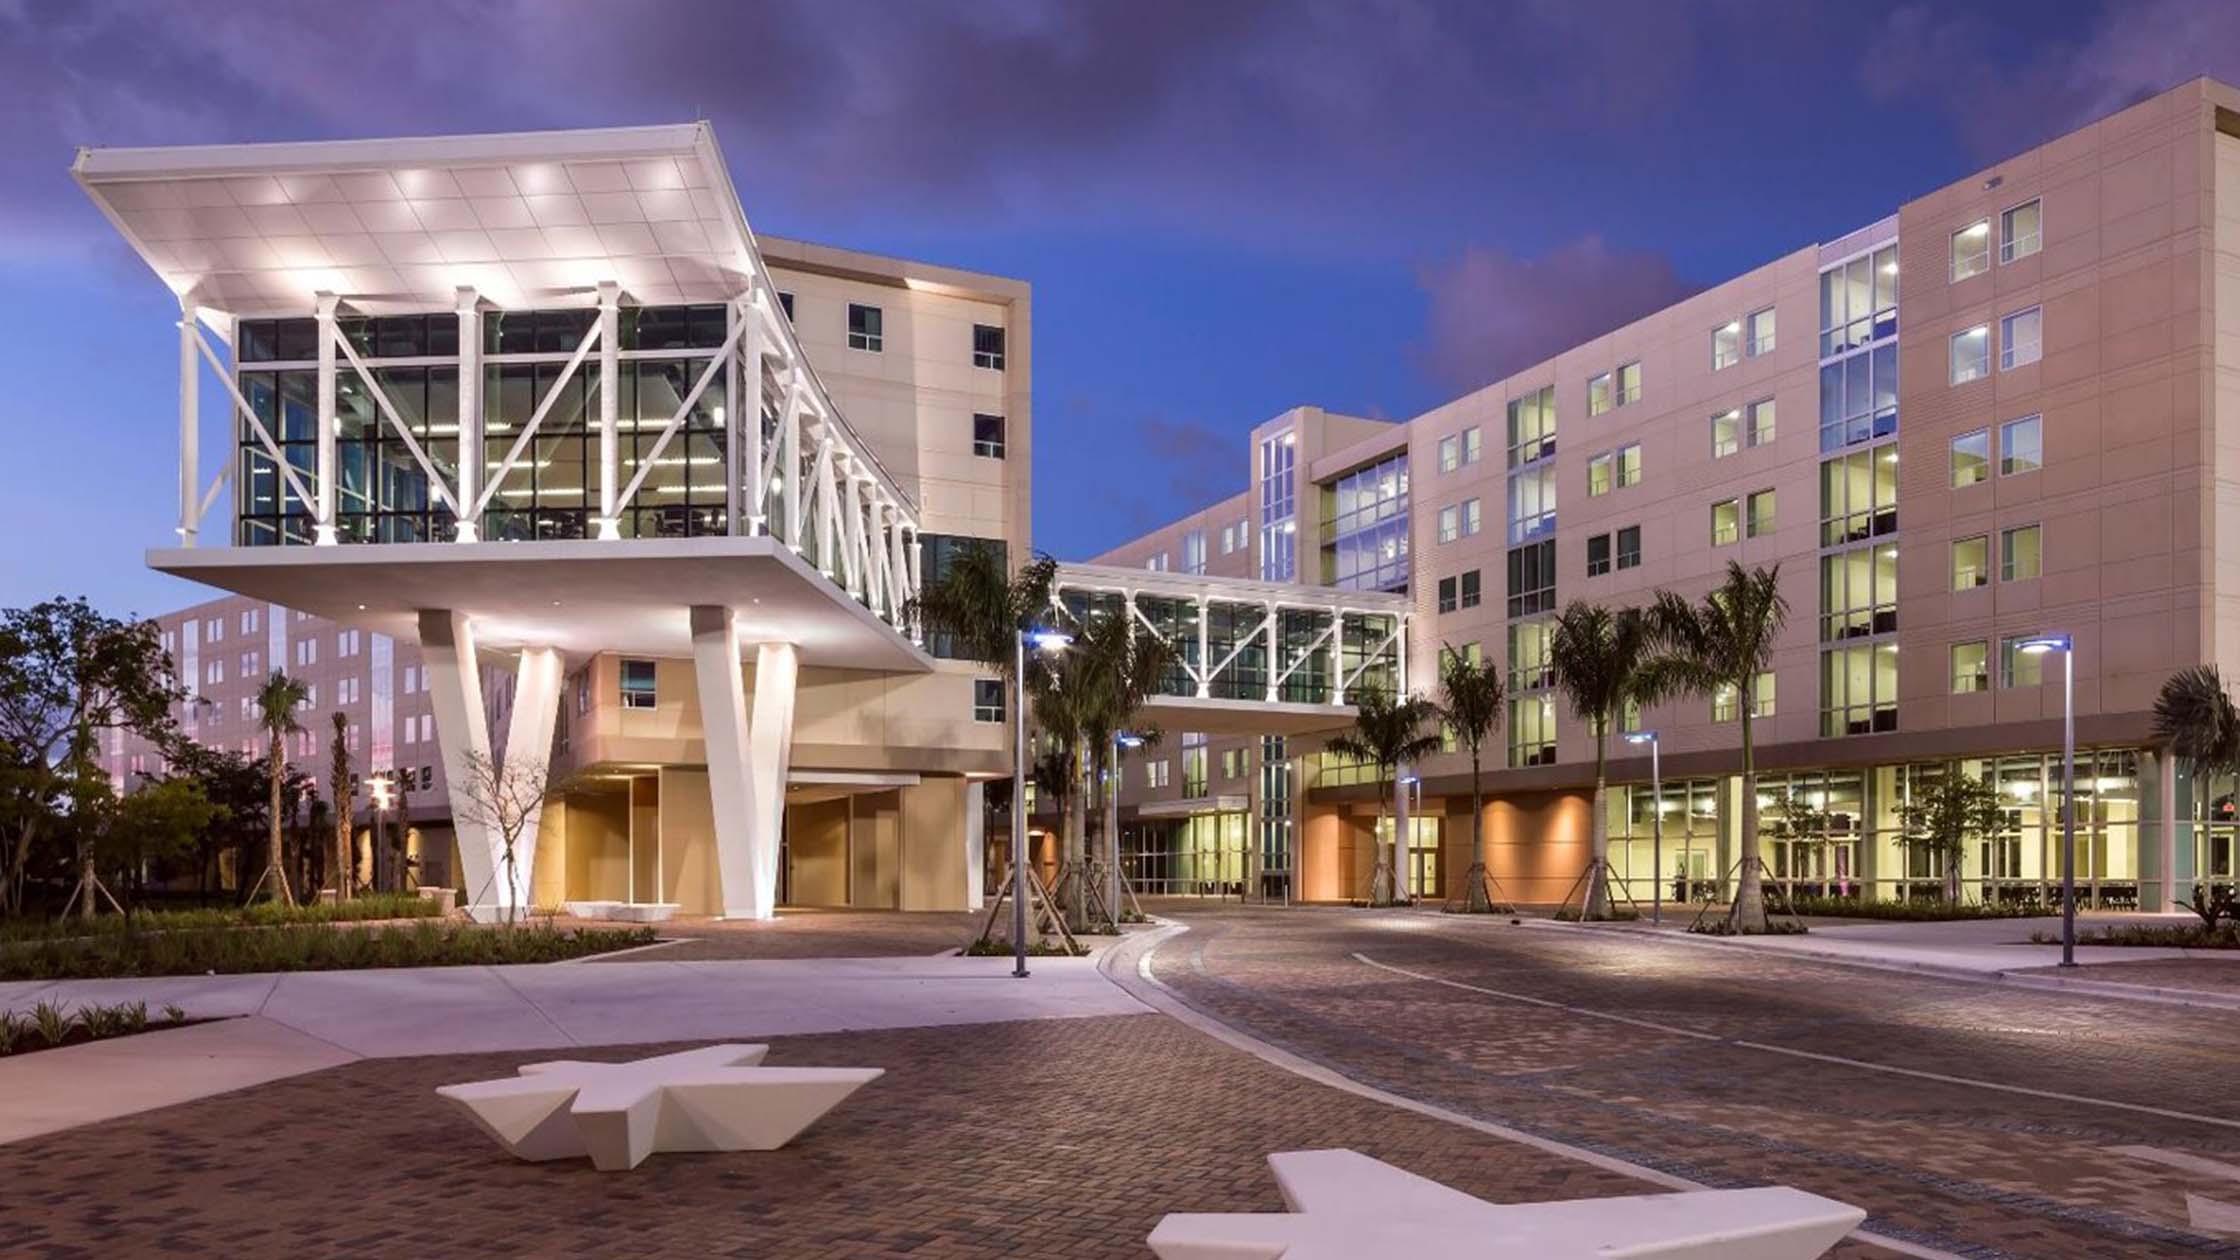 02 Florida International University Parkview Residence and Parking Garage Hall Miami Florida